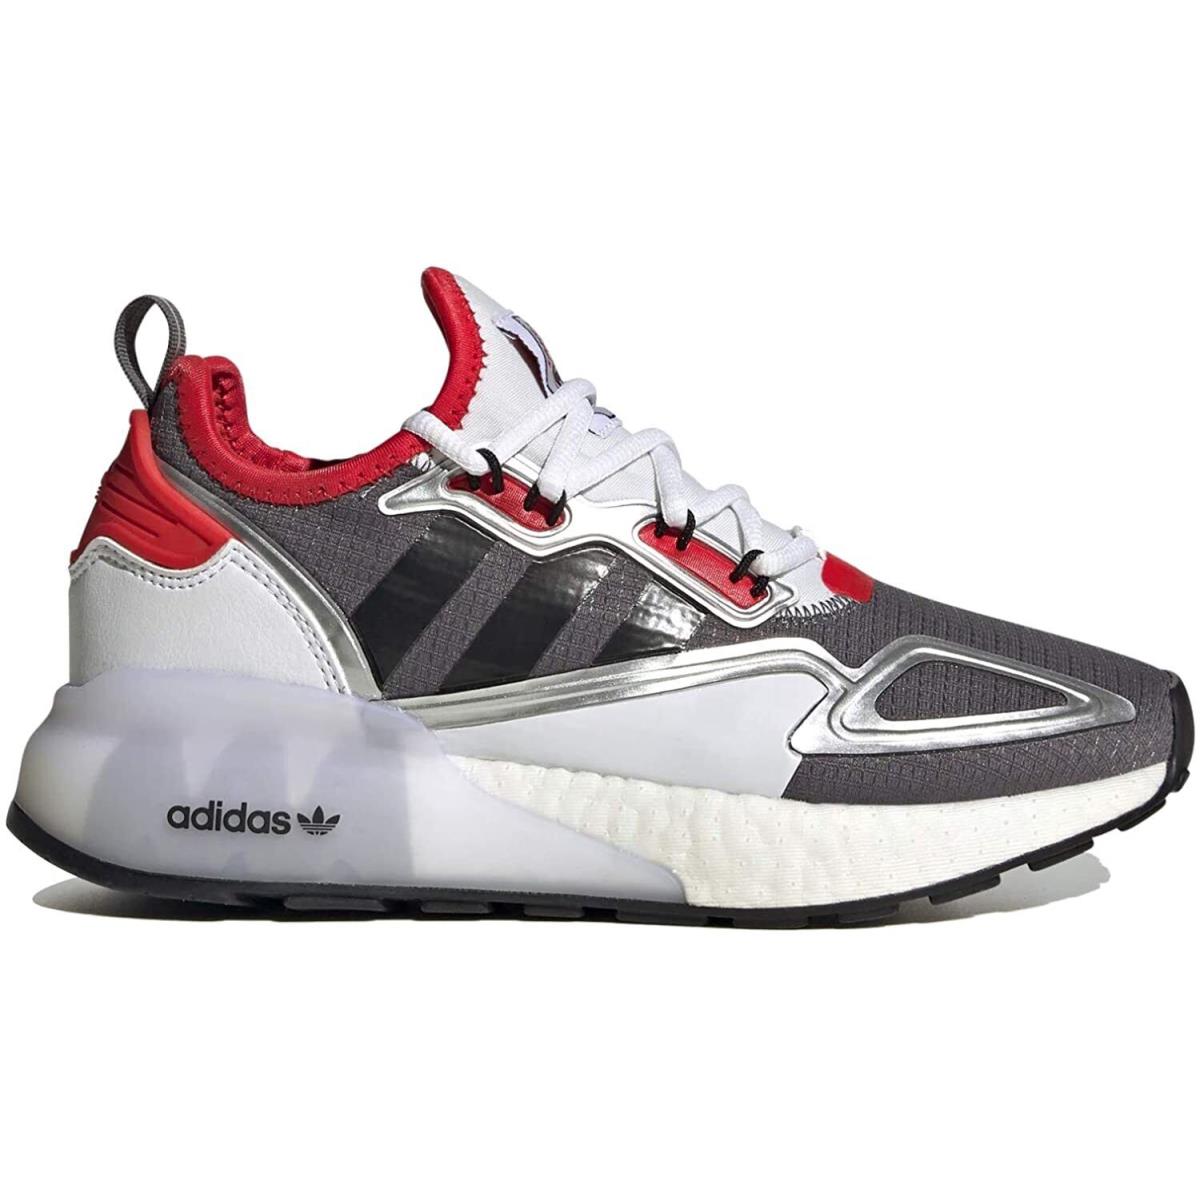 Adidas ZX 2K Boost J Running Big Kids Shoe FX8774 Size 5 Youth